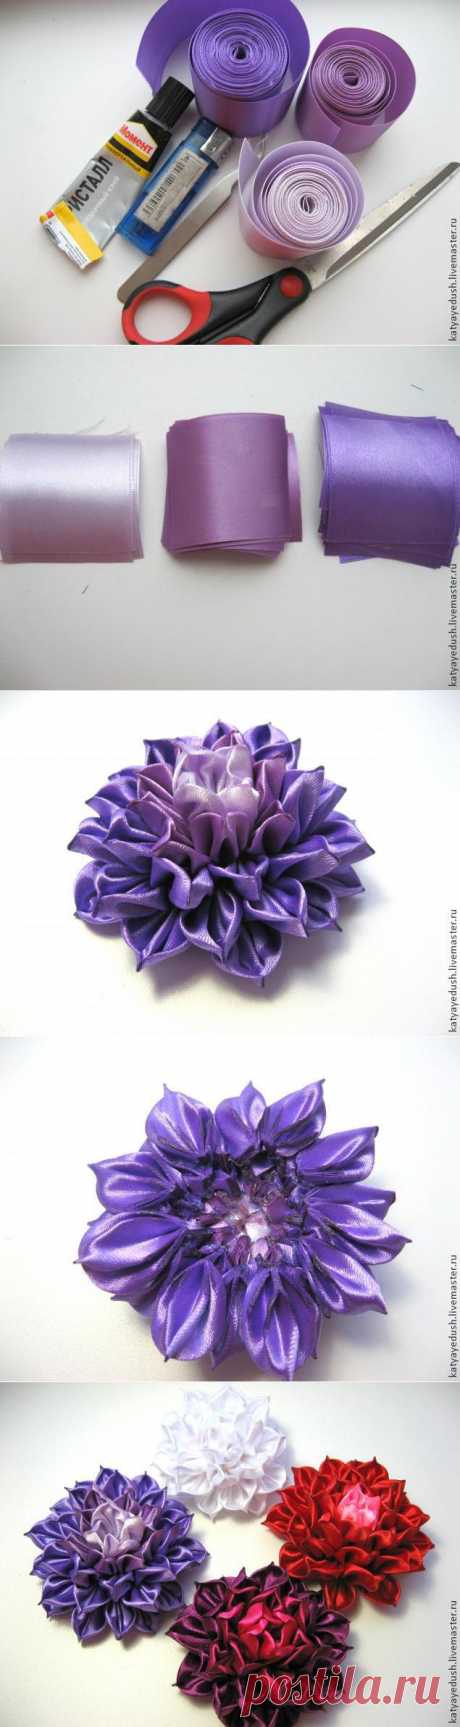 МК цветка из ткани в технике канзаши - Ярмарка Мастеров - ручная работа, handmade